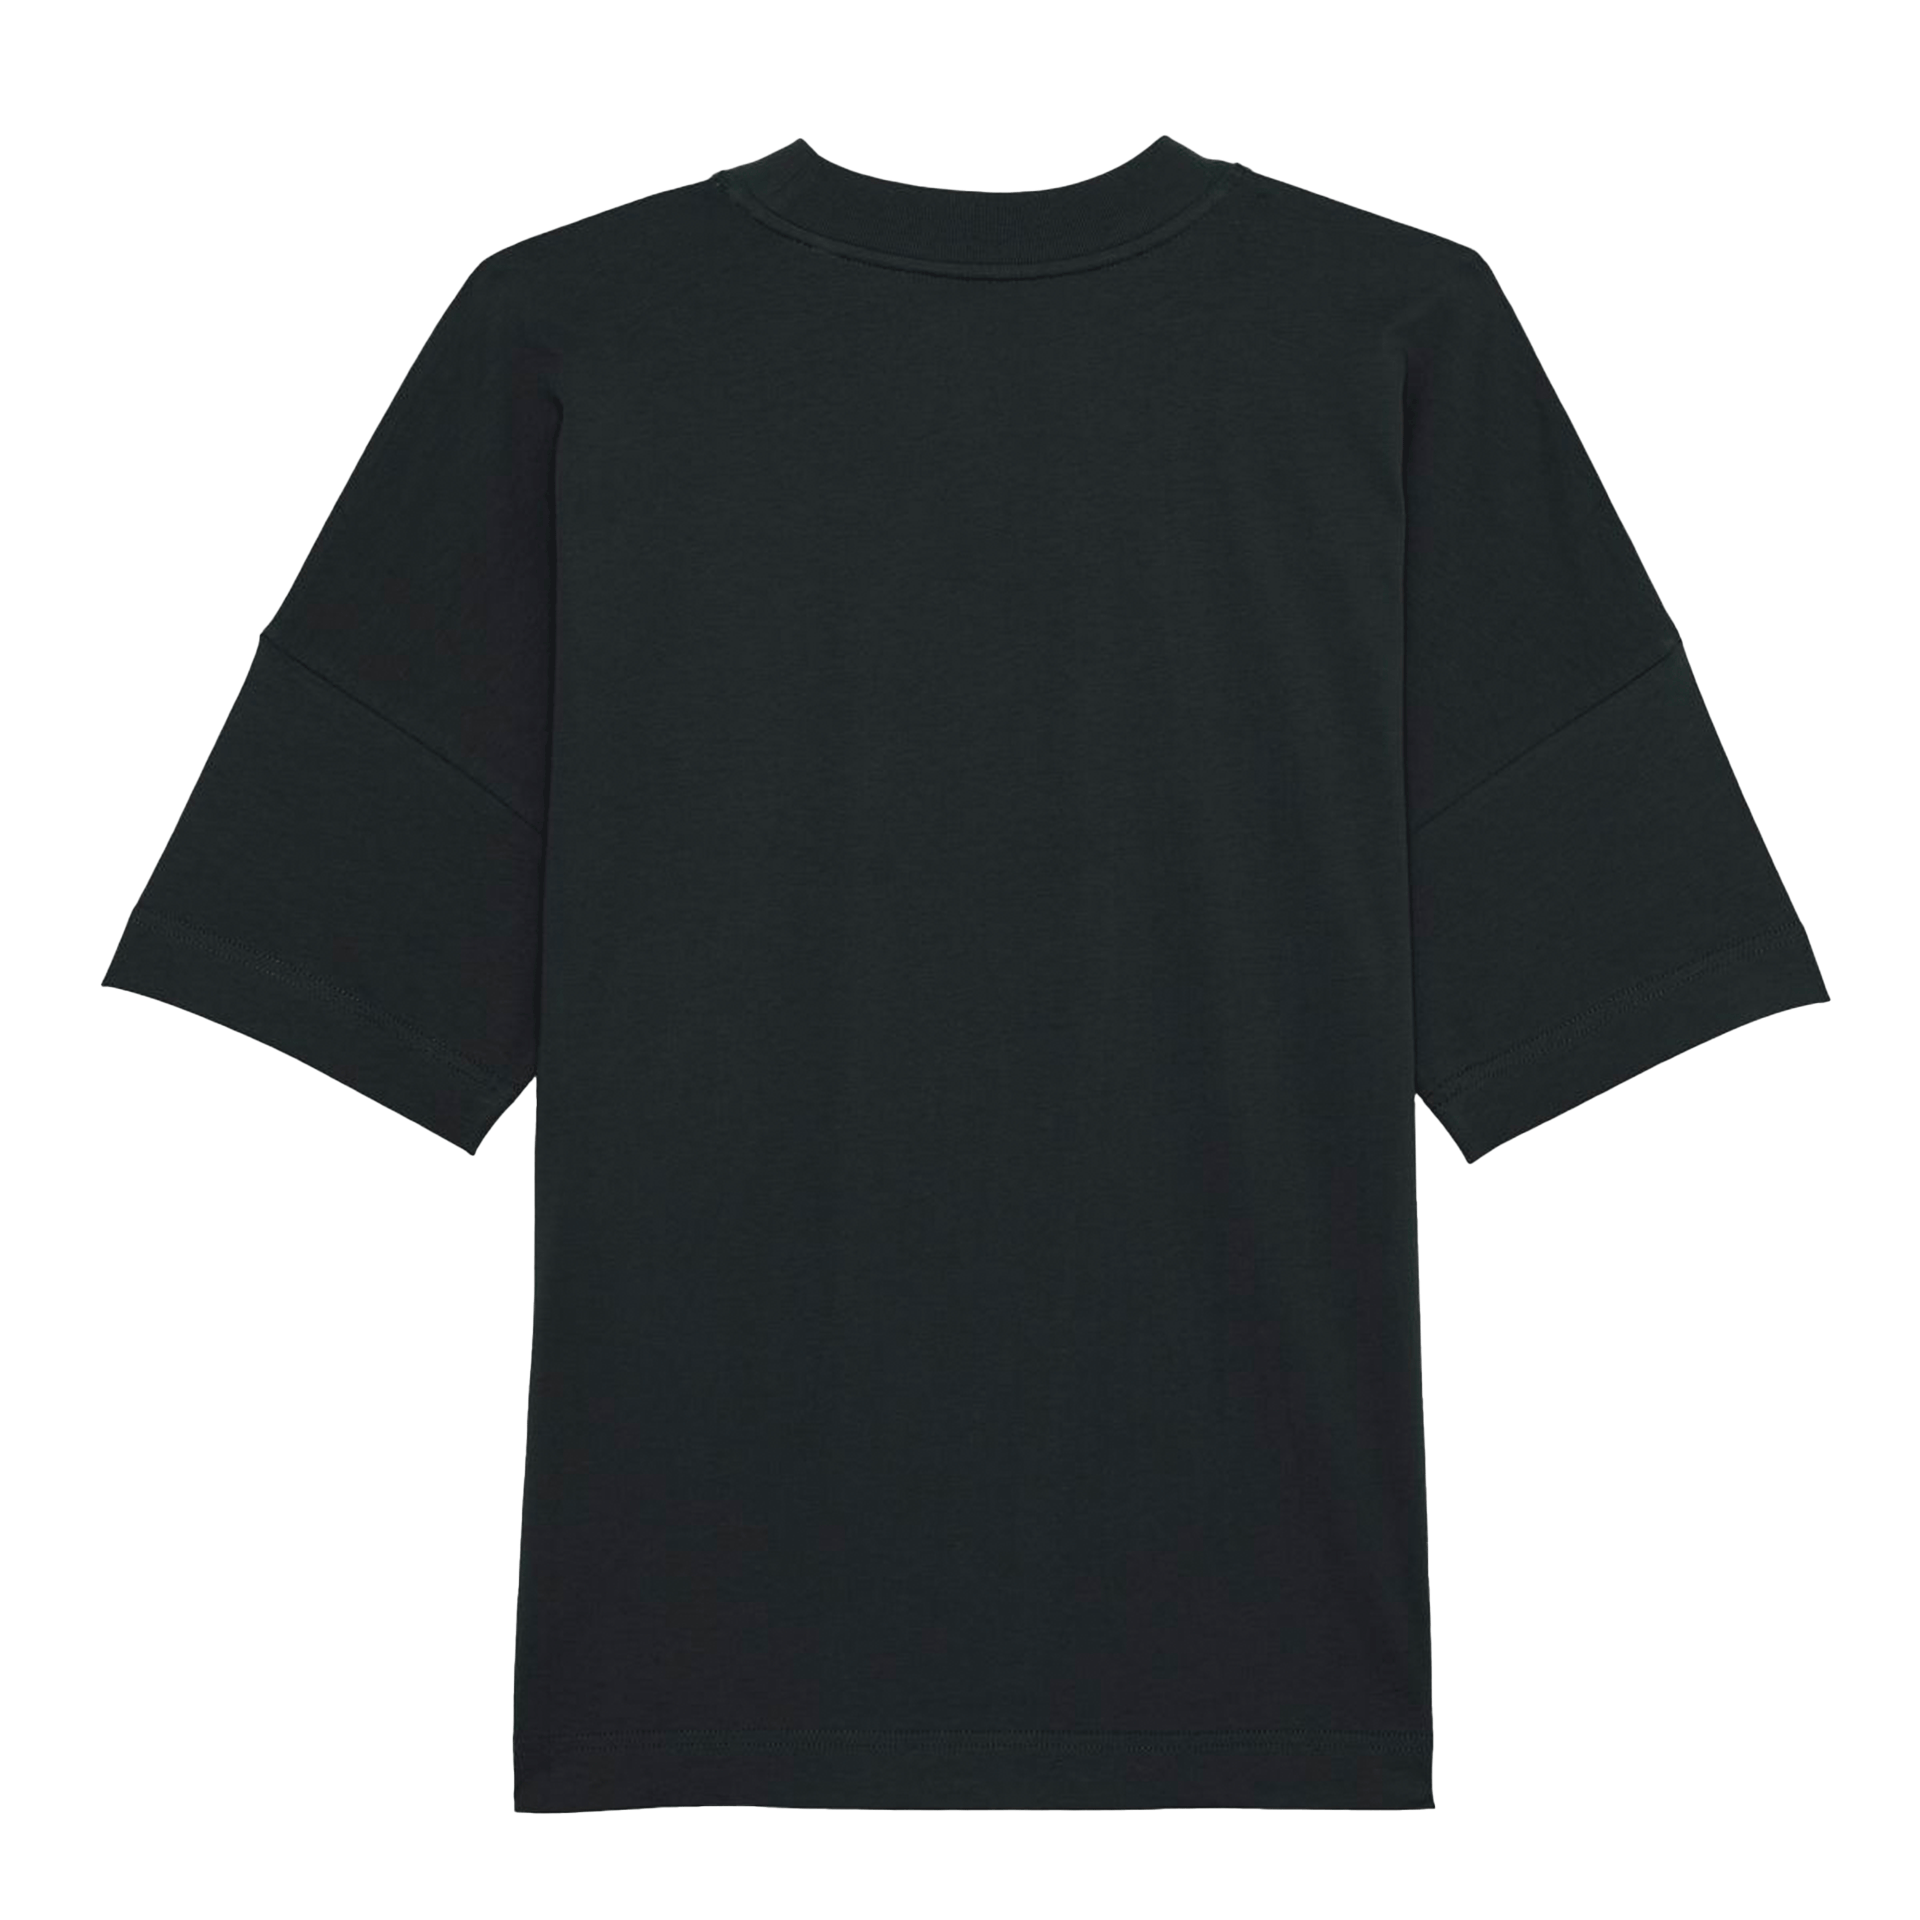 Premium Oversized Shirt Unisex - FOR THE HOMIES